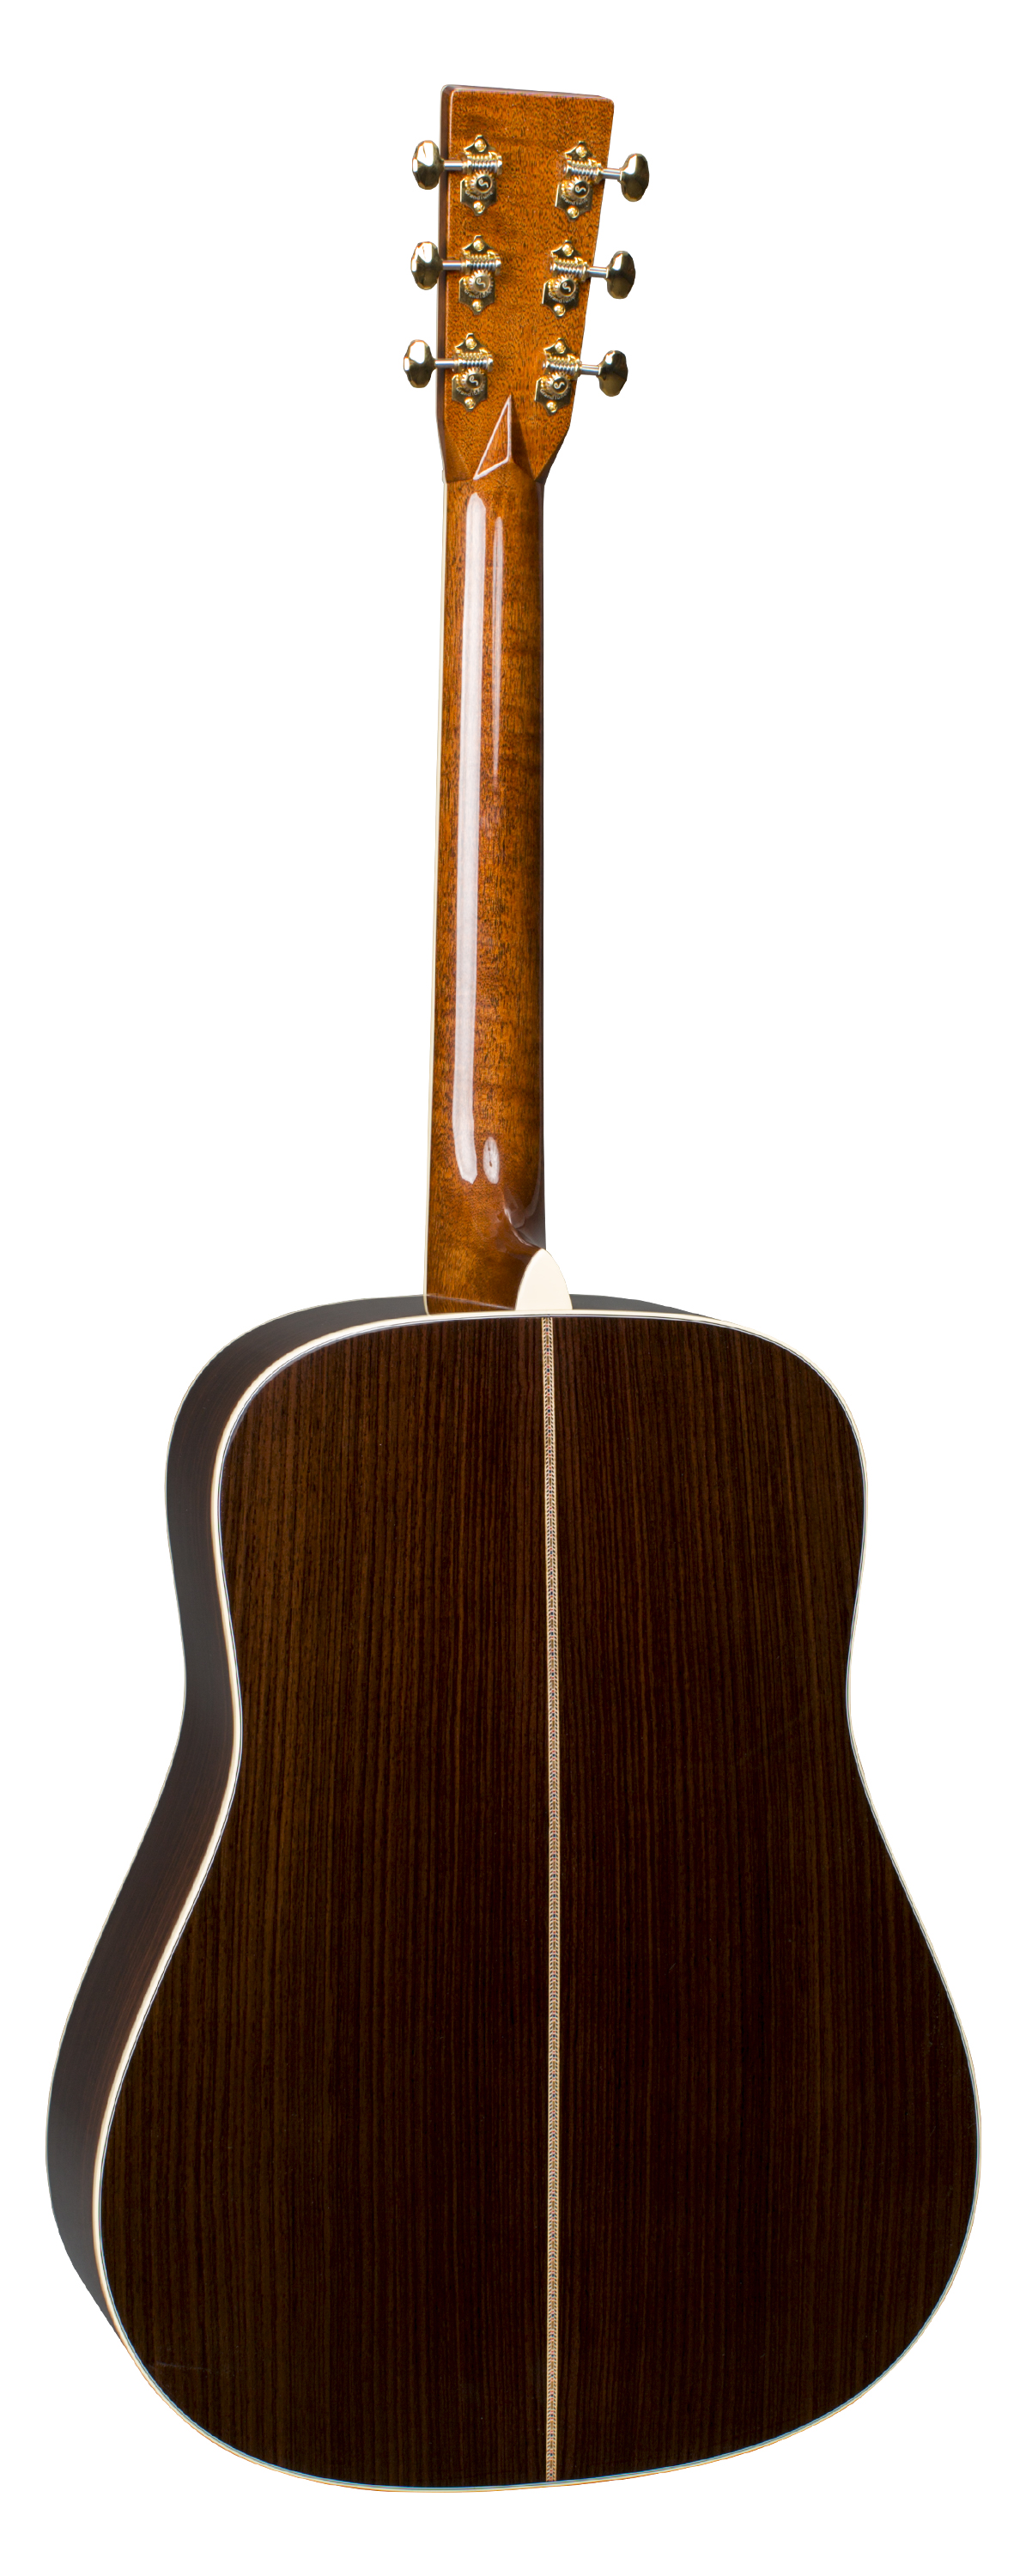 Martin D-42 Acoustic Guitar